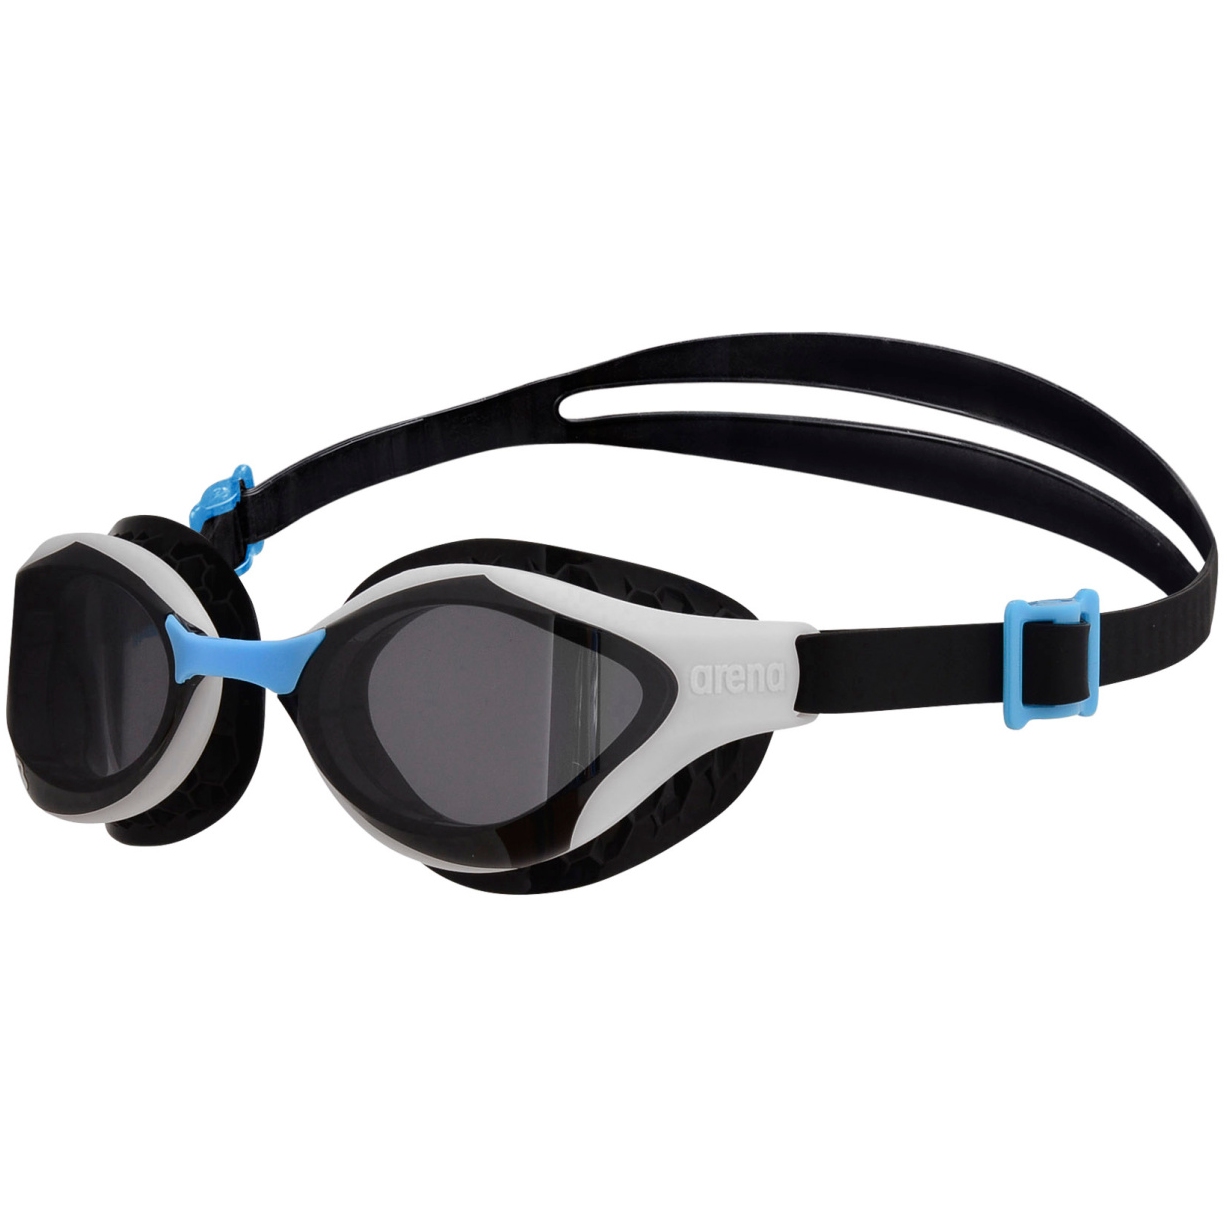 Picture of arena Air-Bold Swipe Swimming Goggles - Smoke - White/Black